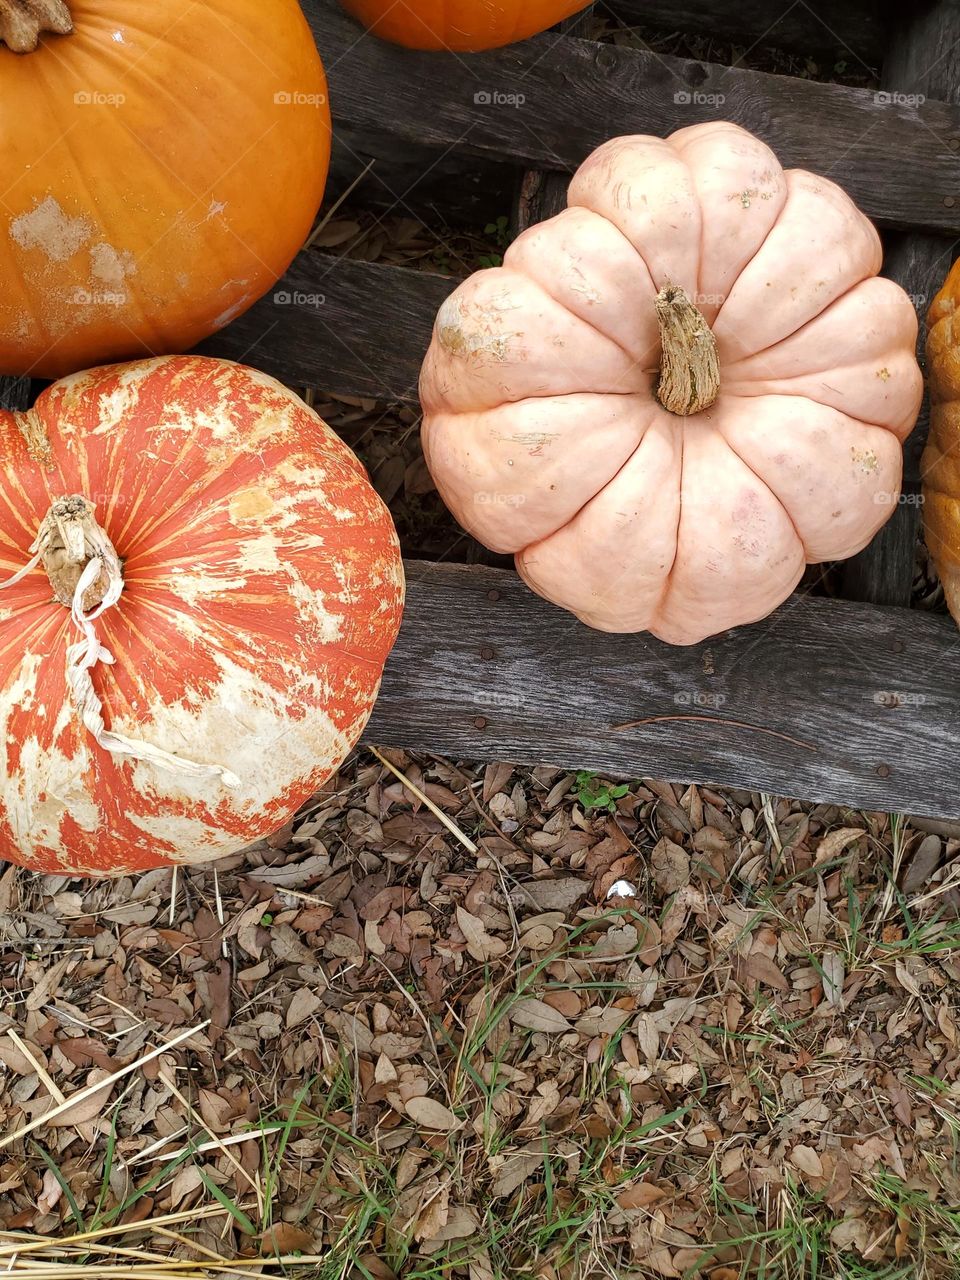 Not your average pumpkins!